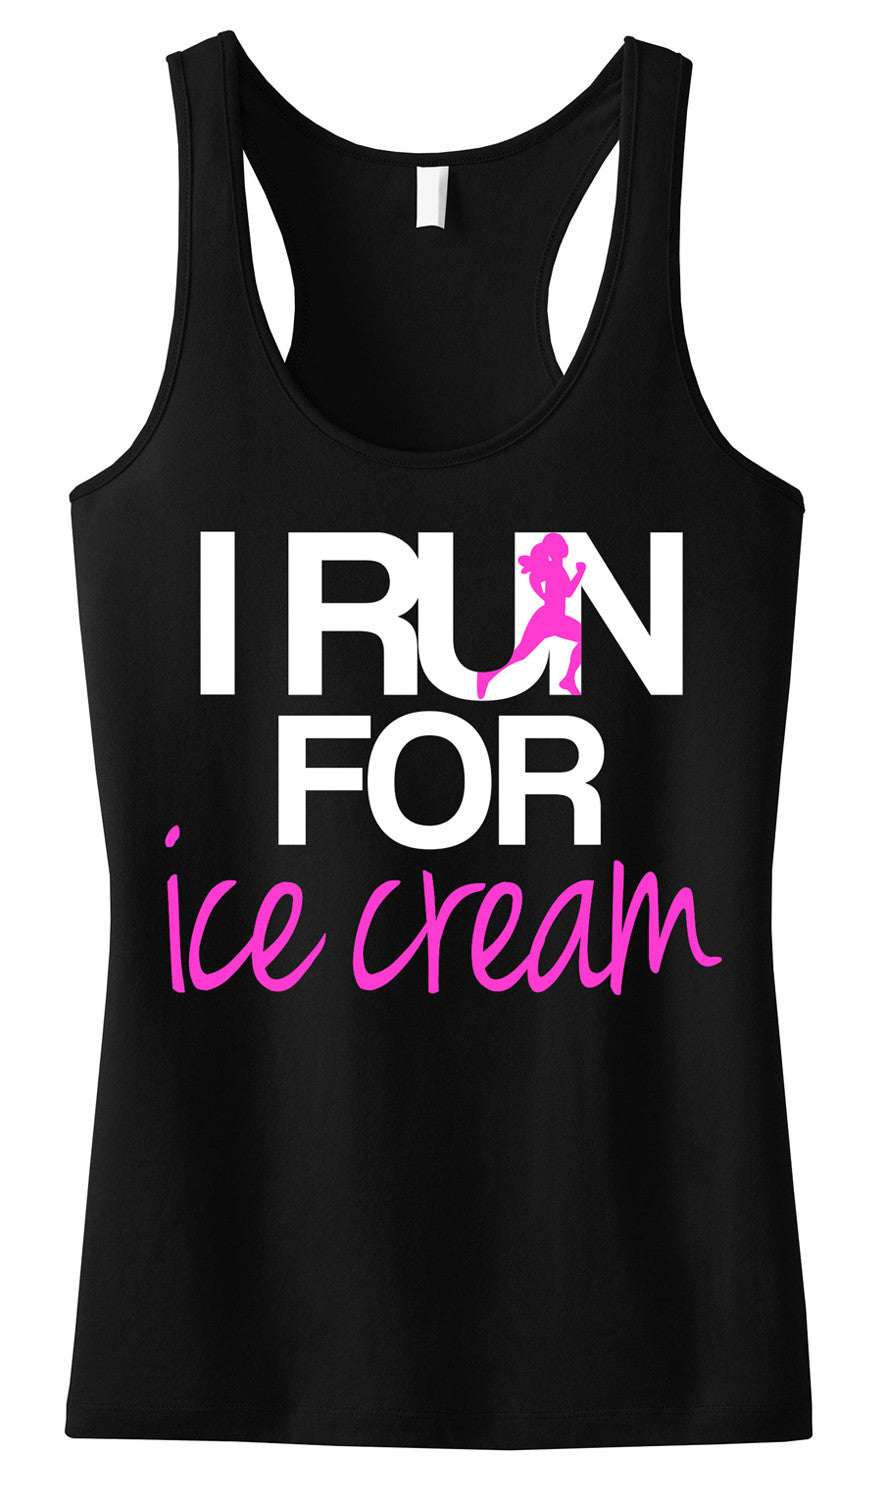 I RUN for Ice Cream Tank Top